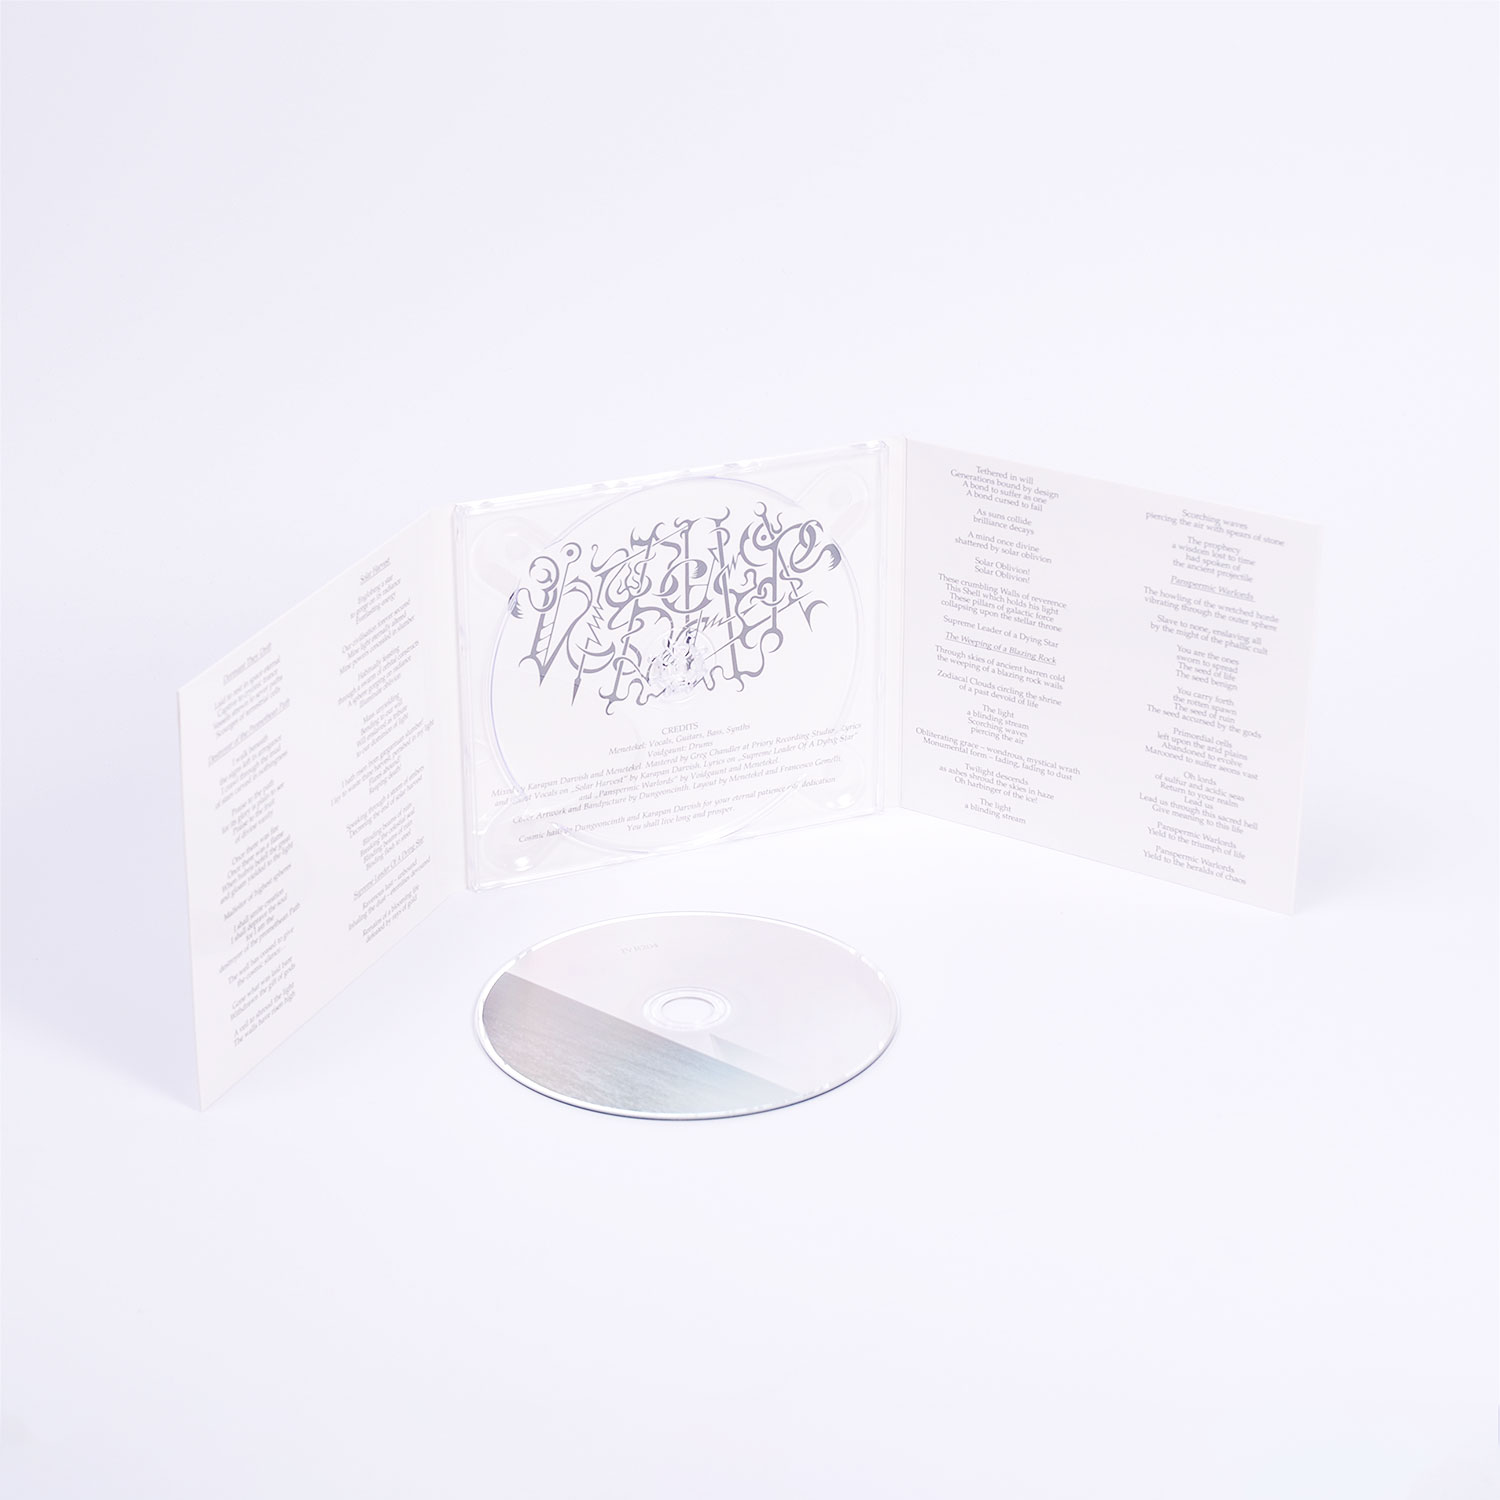 Wyrgher – Panspermic Warlords CD – Metal Odyssey